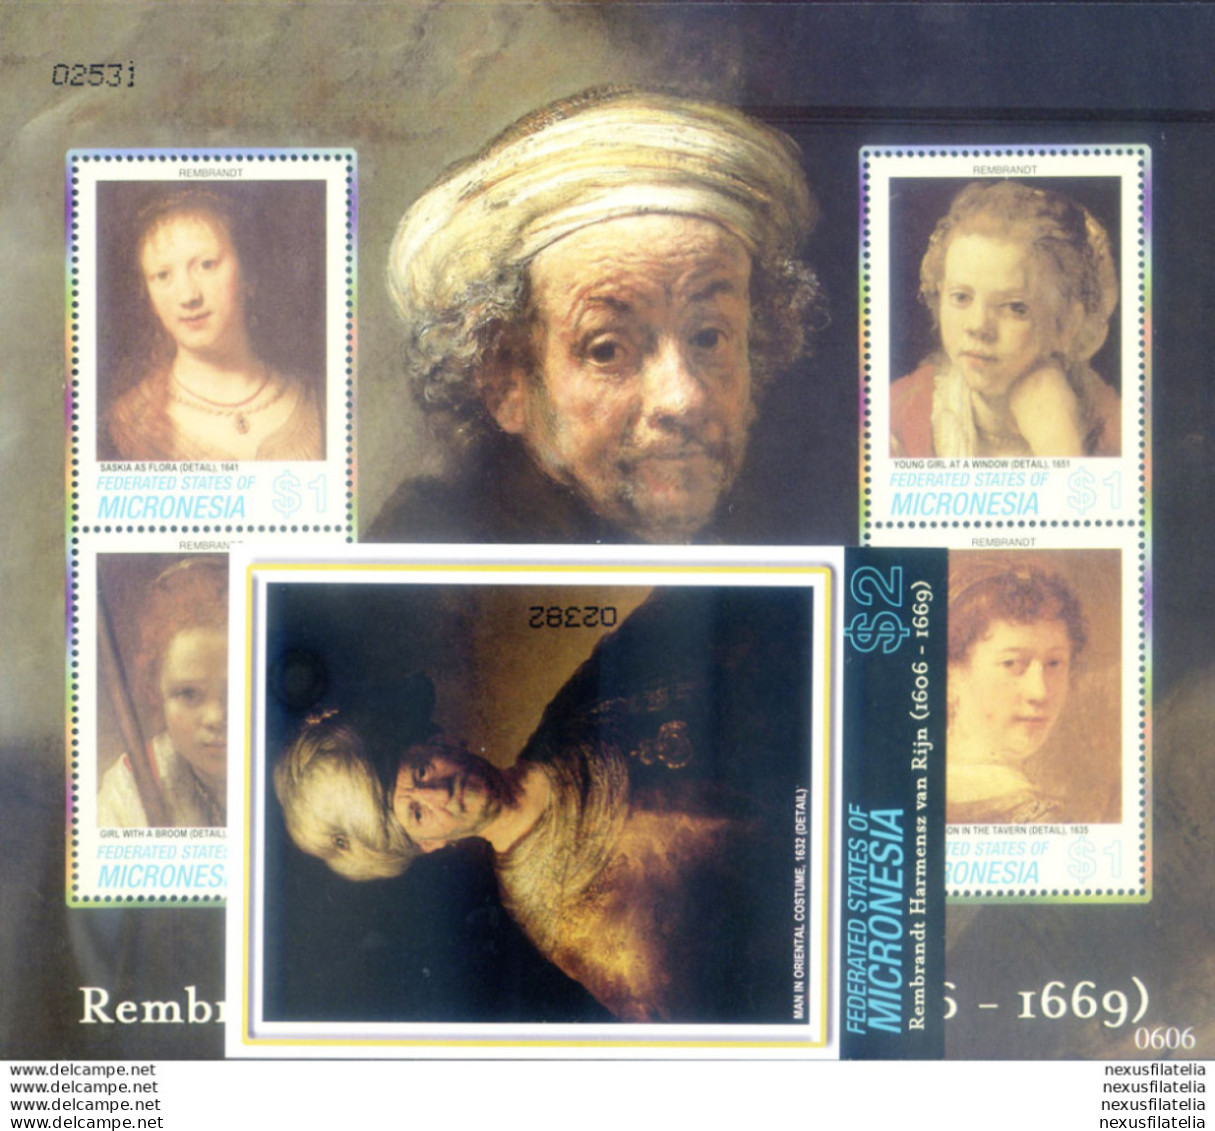 Rembrandt 2006. - Micronesië